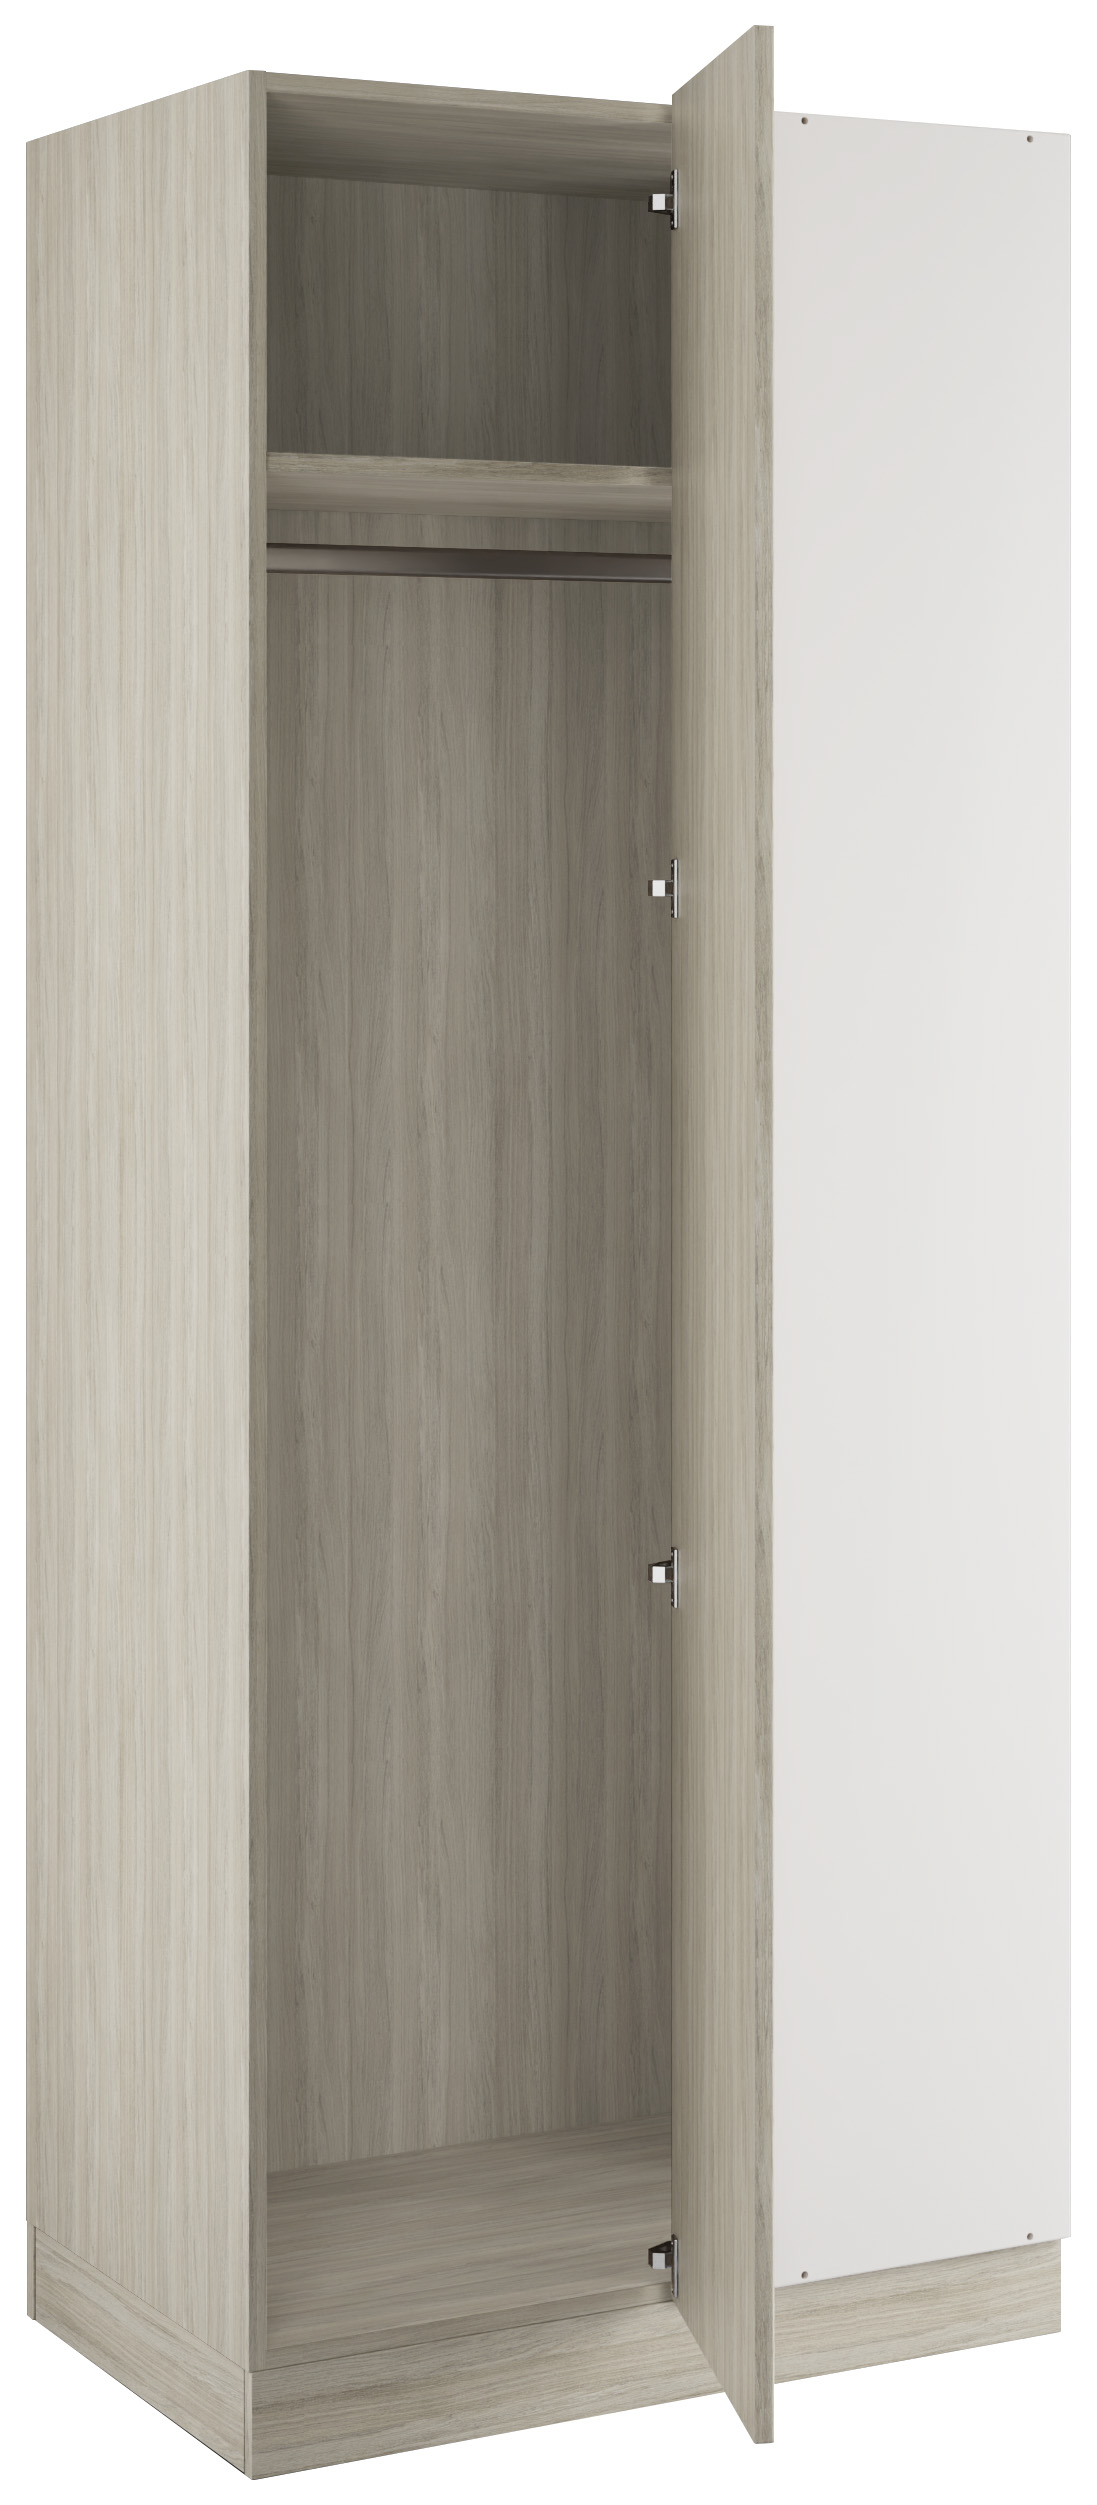 Harrogate Urban Oak Blind Corner Wardrobe - 900 x 2260 x 608mm